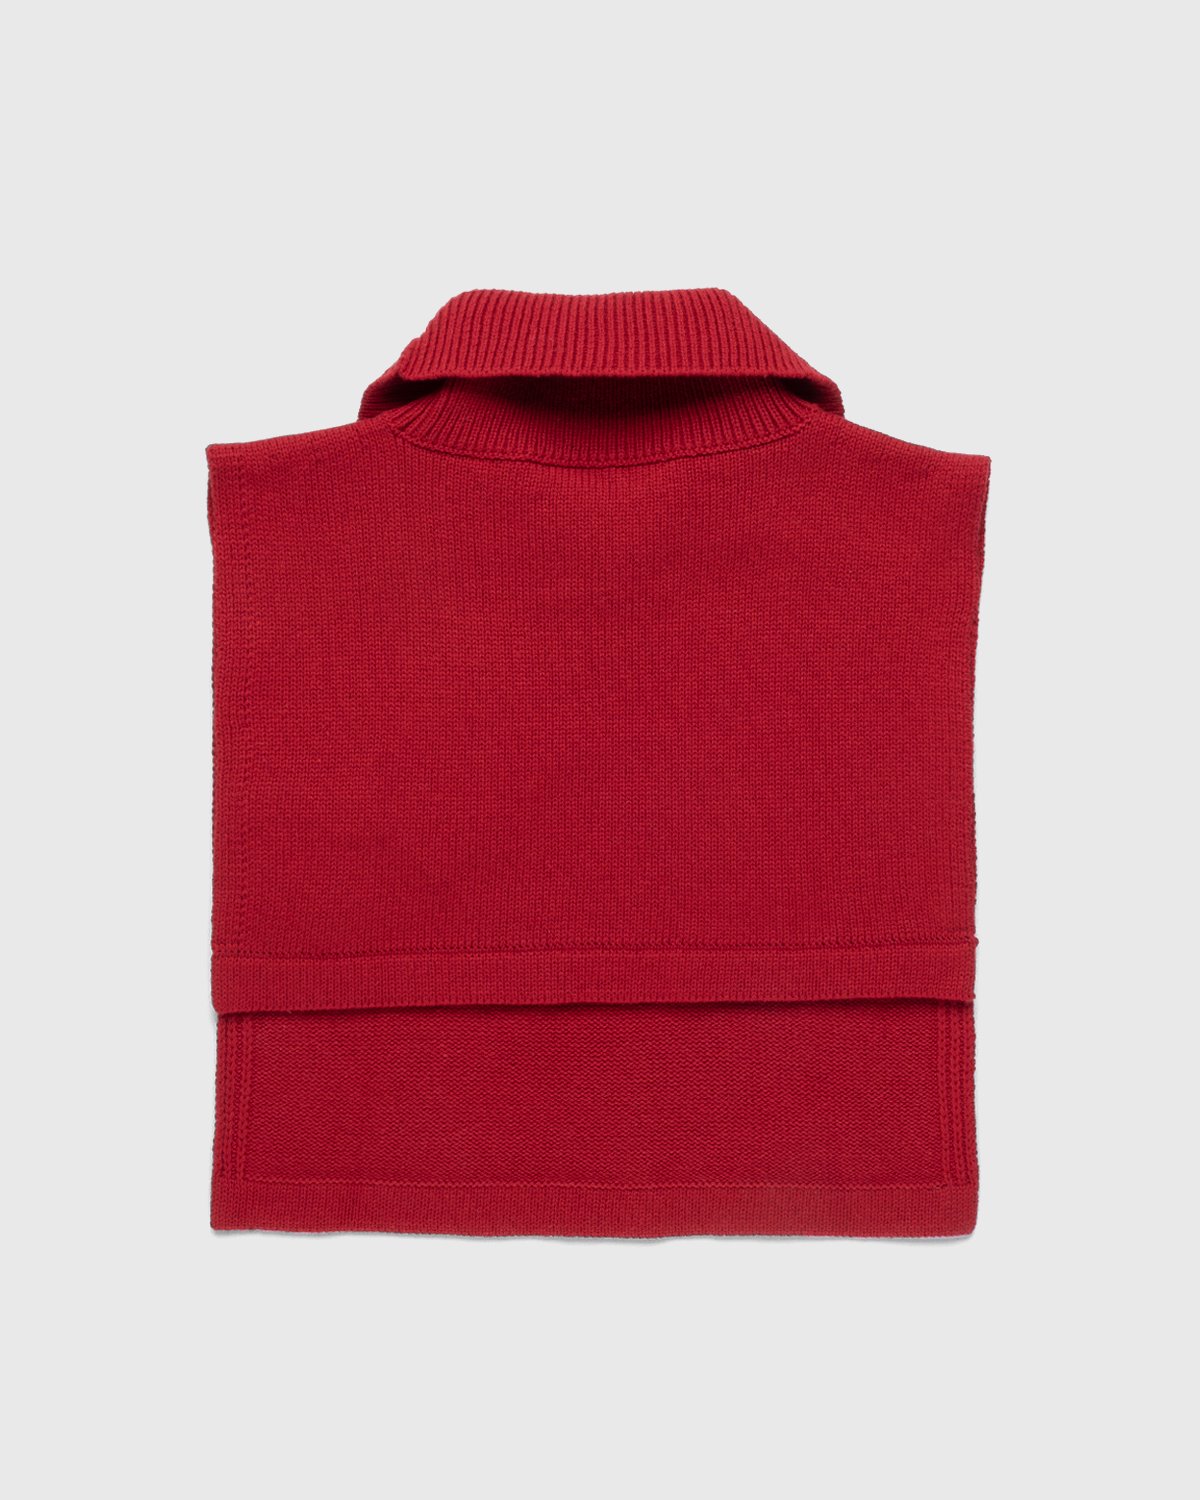 Jil Sander - Plastron Bib Red - Accessories - Red - Image 2